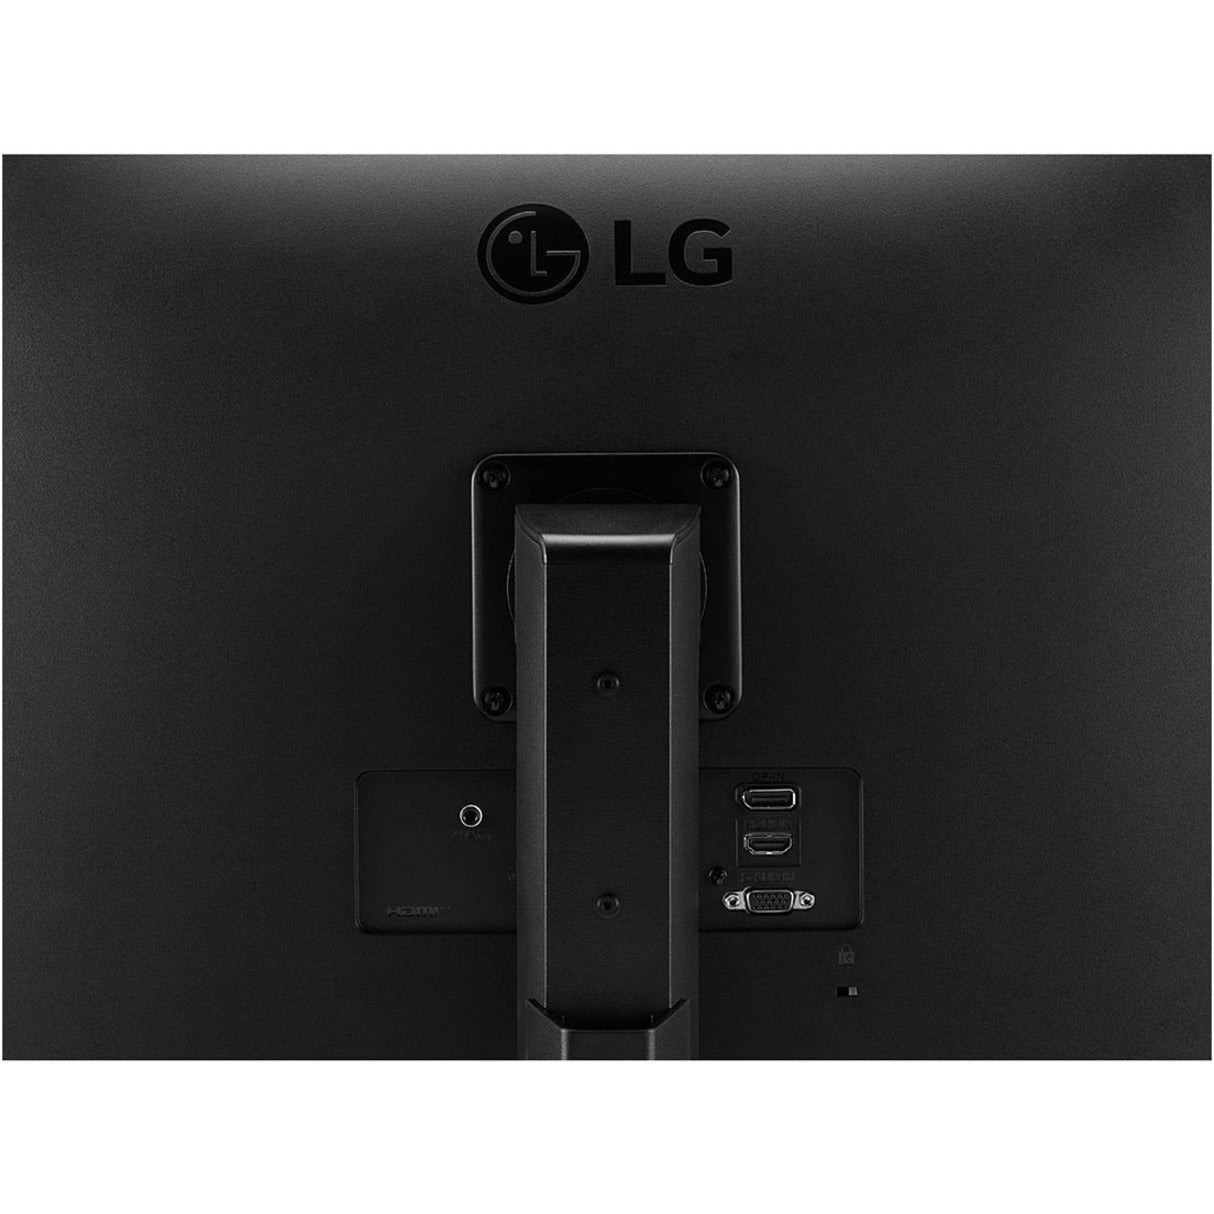 LG 24BP450Y-B 23.8" Full HD LCD Monitor - 16:9 - Matte Black - TAA Compliant